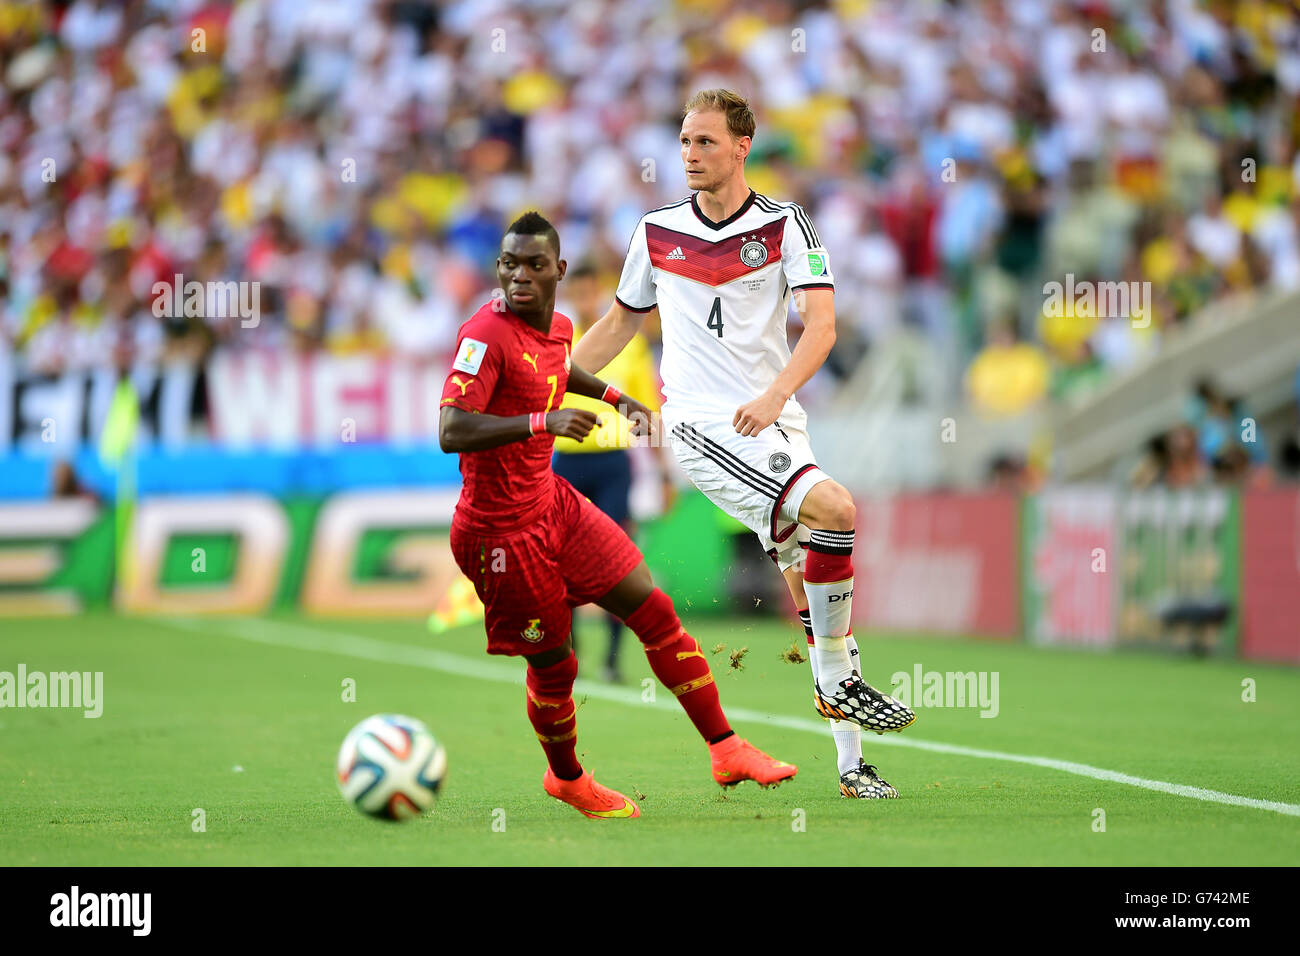 Soccer - FIFA World Cup 2014 - Group G - Germany v Ghana - Estadio Castelao. Germany's Benedikt Howedes (right) and Ghana's Christian Atsu battle for the ball Stock Photo